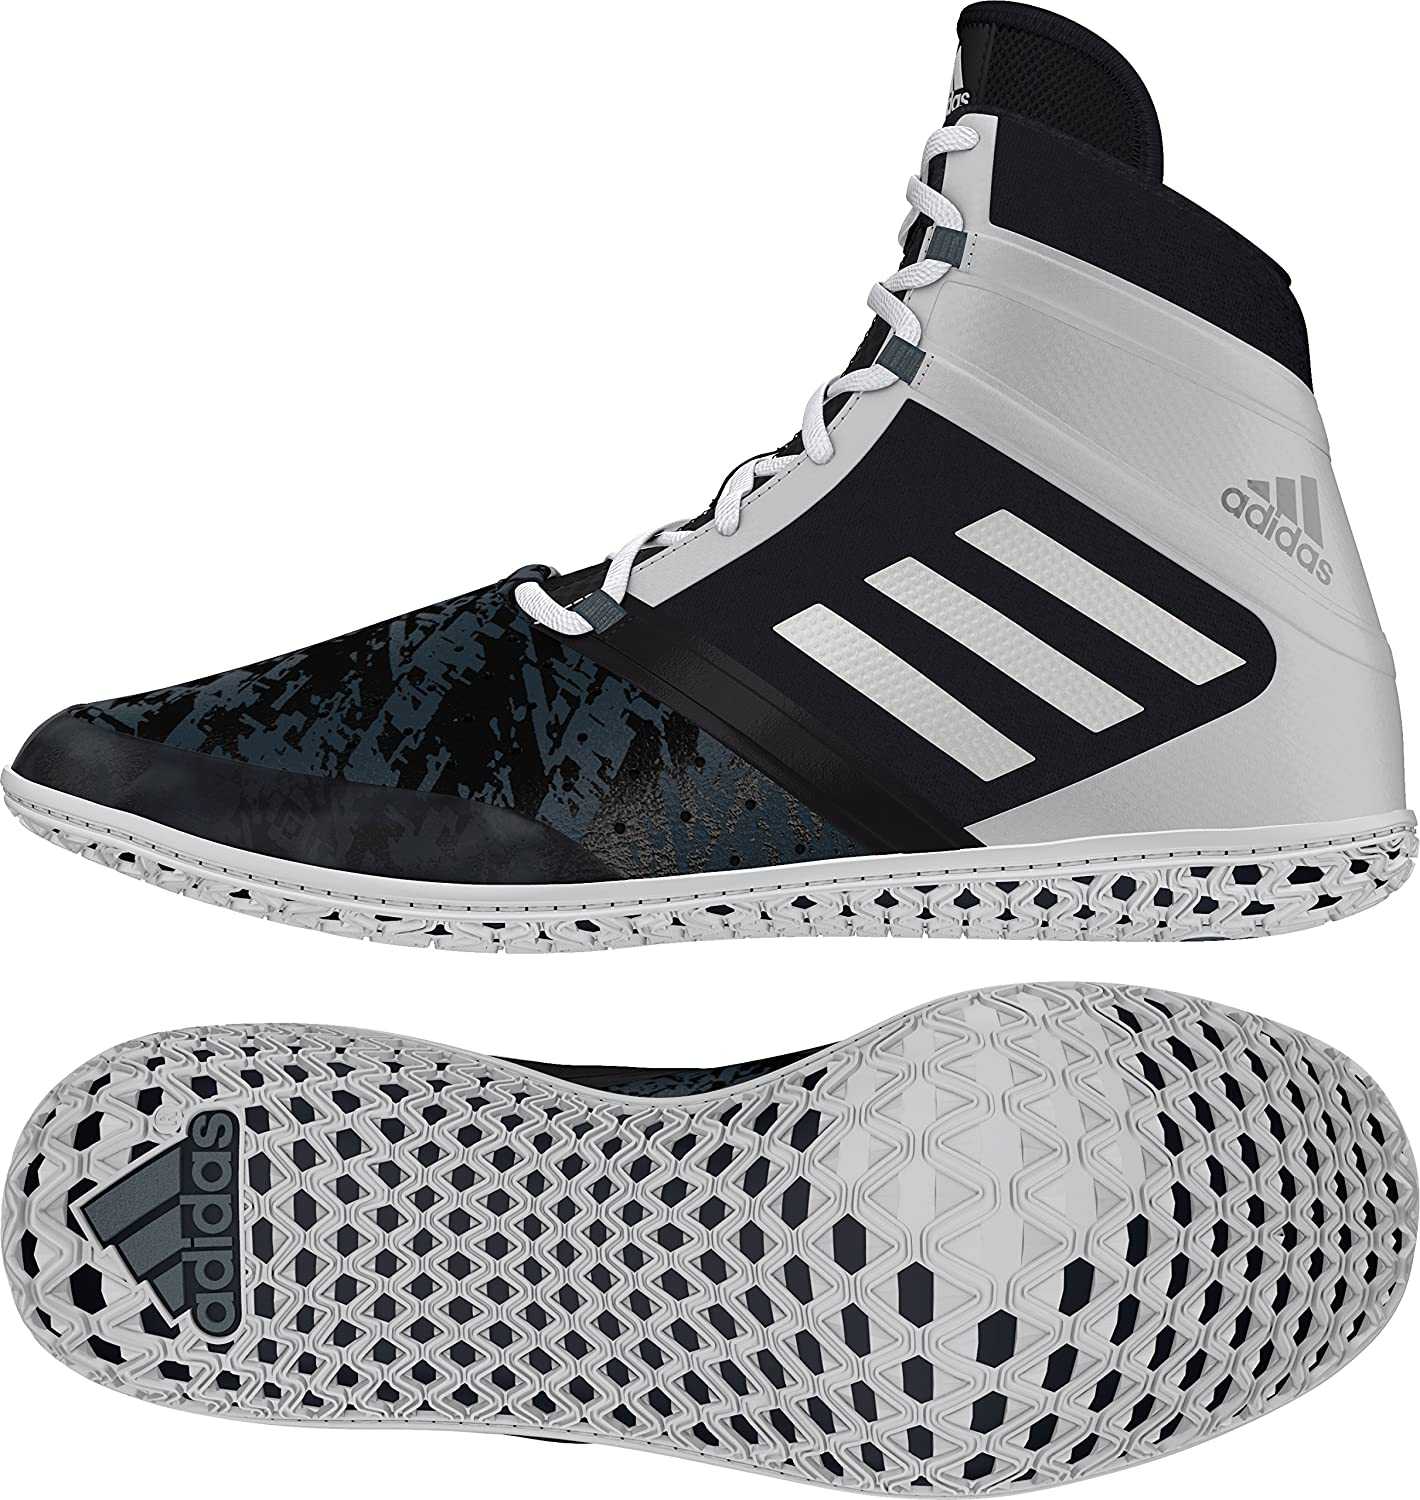 Adidas AC7491 Impact Wrestling Shoes - Black Silver